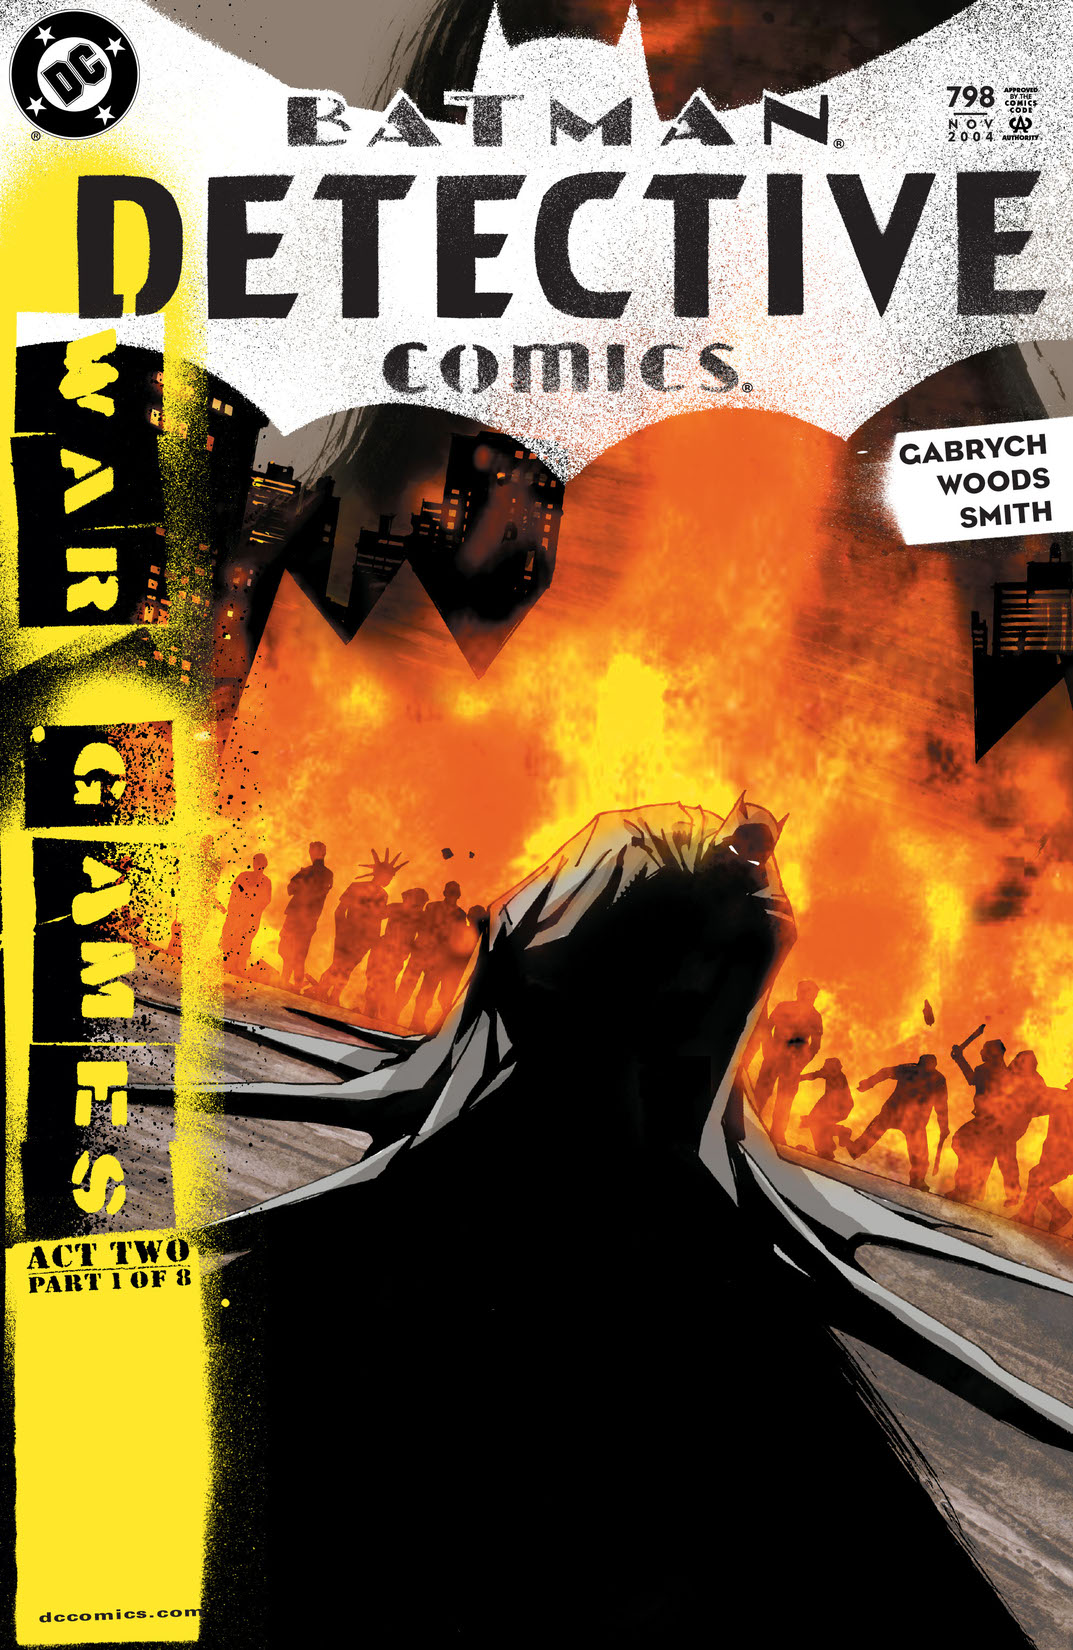 Detective Comics (1937-) #798 preview images